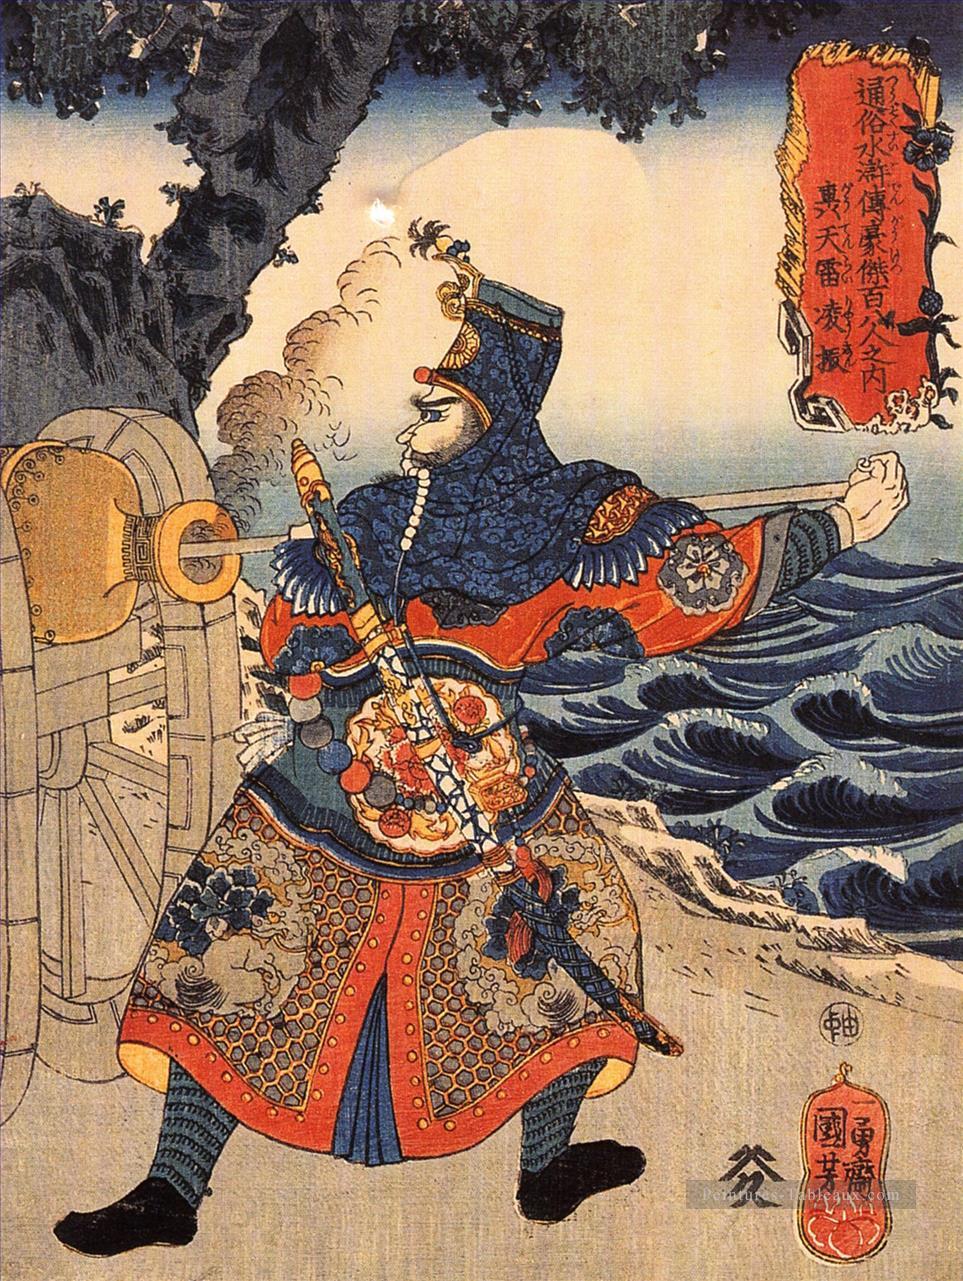 kotenrai ryioshin chargement d’un Connon Utagawa Kuniyoshi ukiyo e Peintures à l'huile